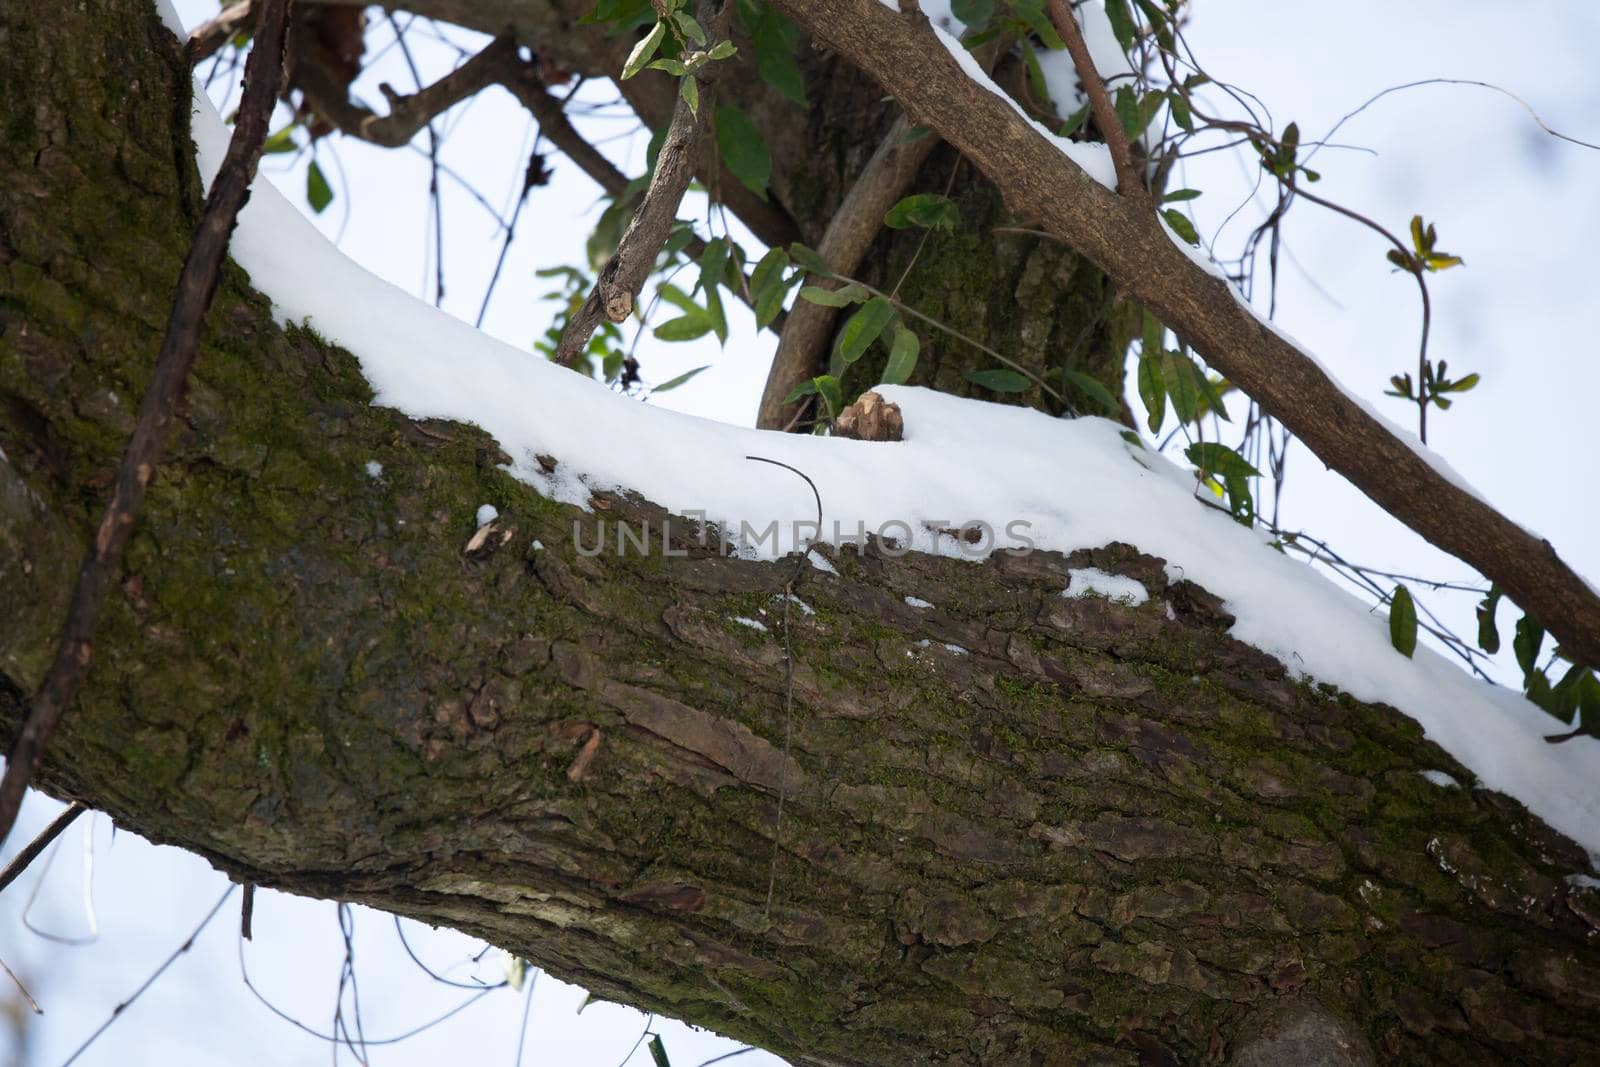 Snow along Tree Limbs by tornado98